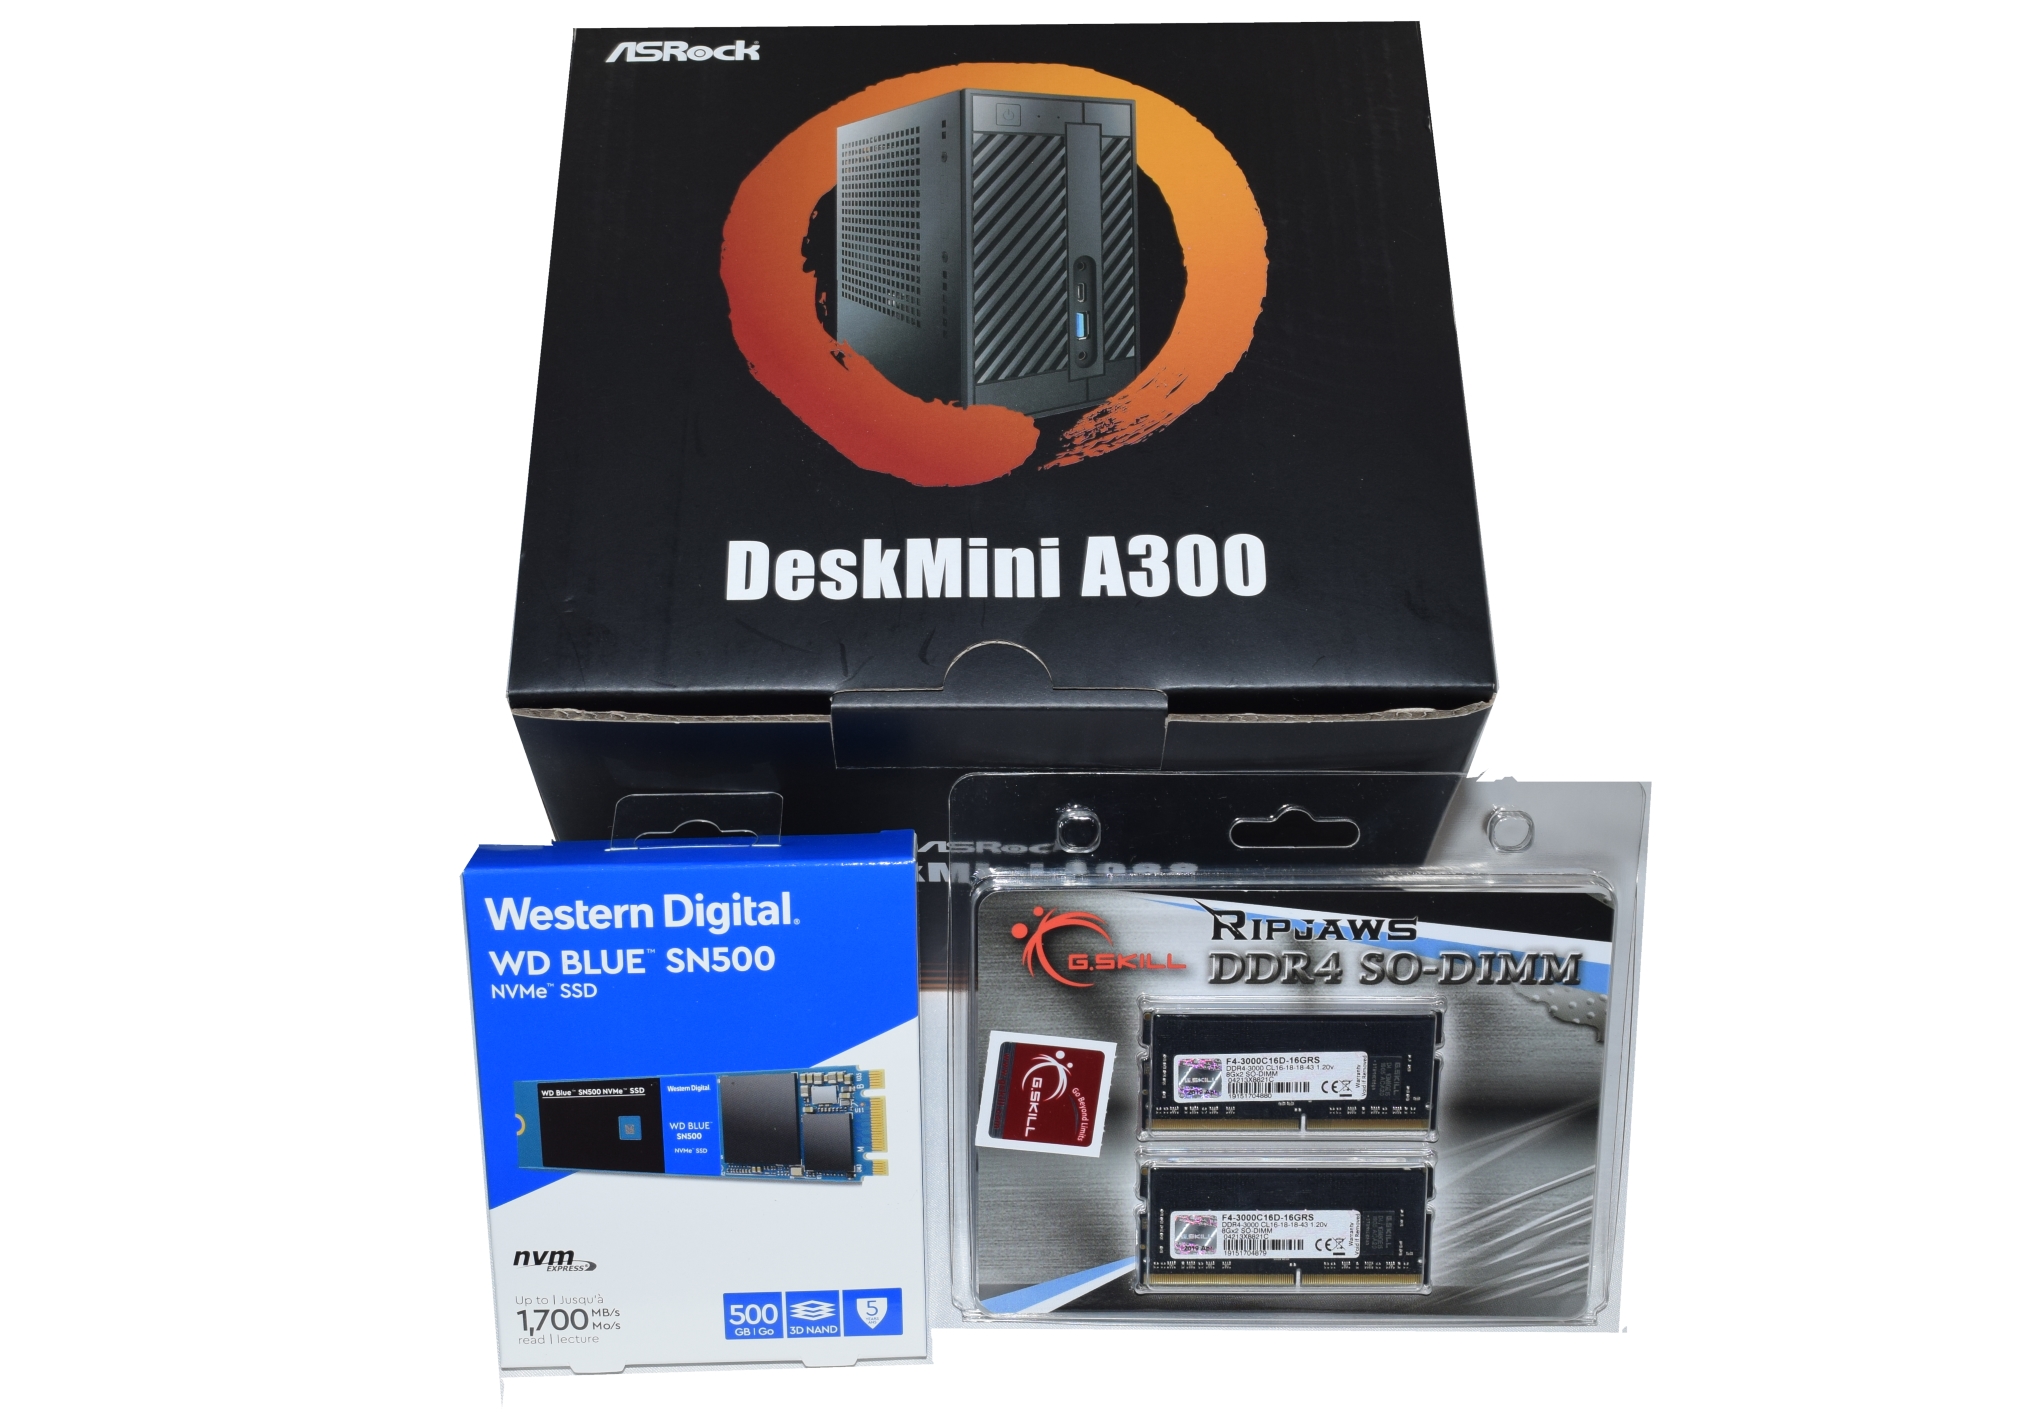 PC/タブレット PCパーツ The ASRock DeskMini A300 Review: An Affordable DIY AMD Ryzen mini-PC